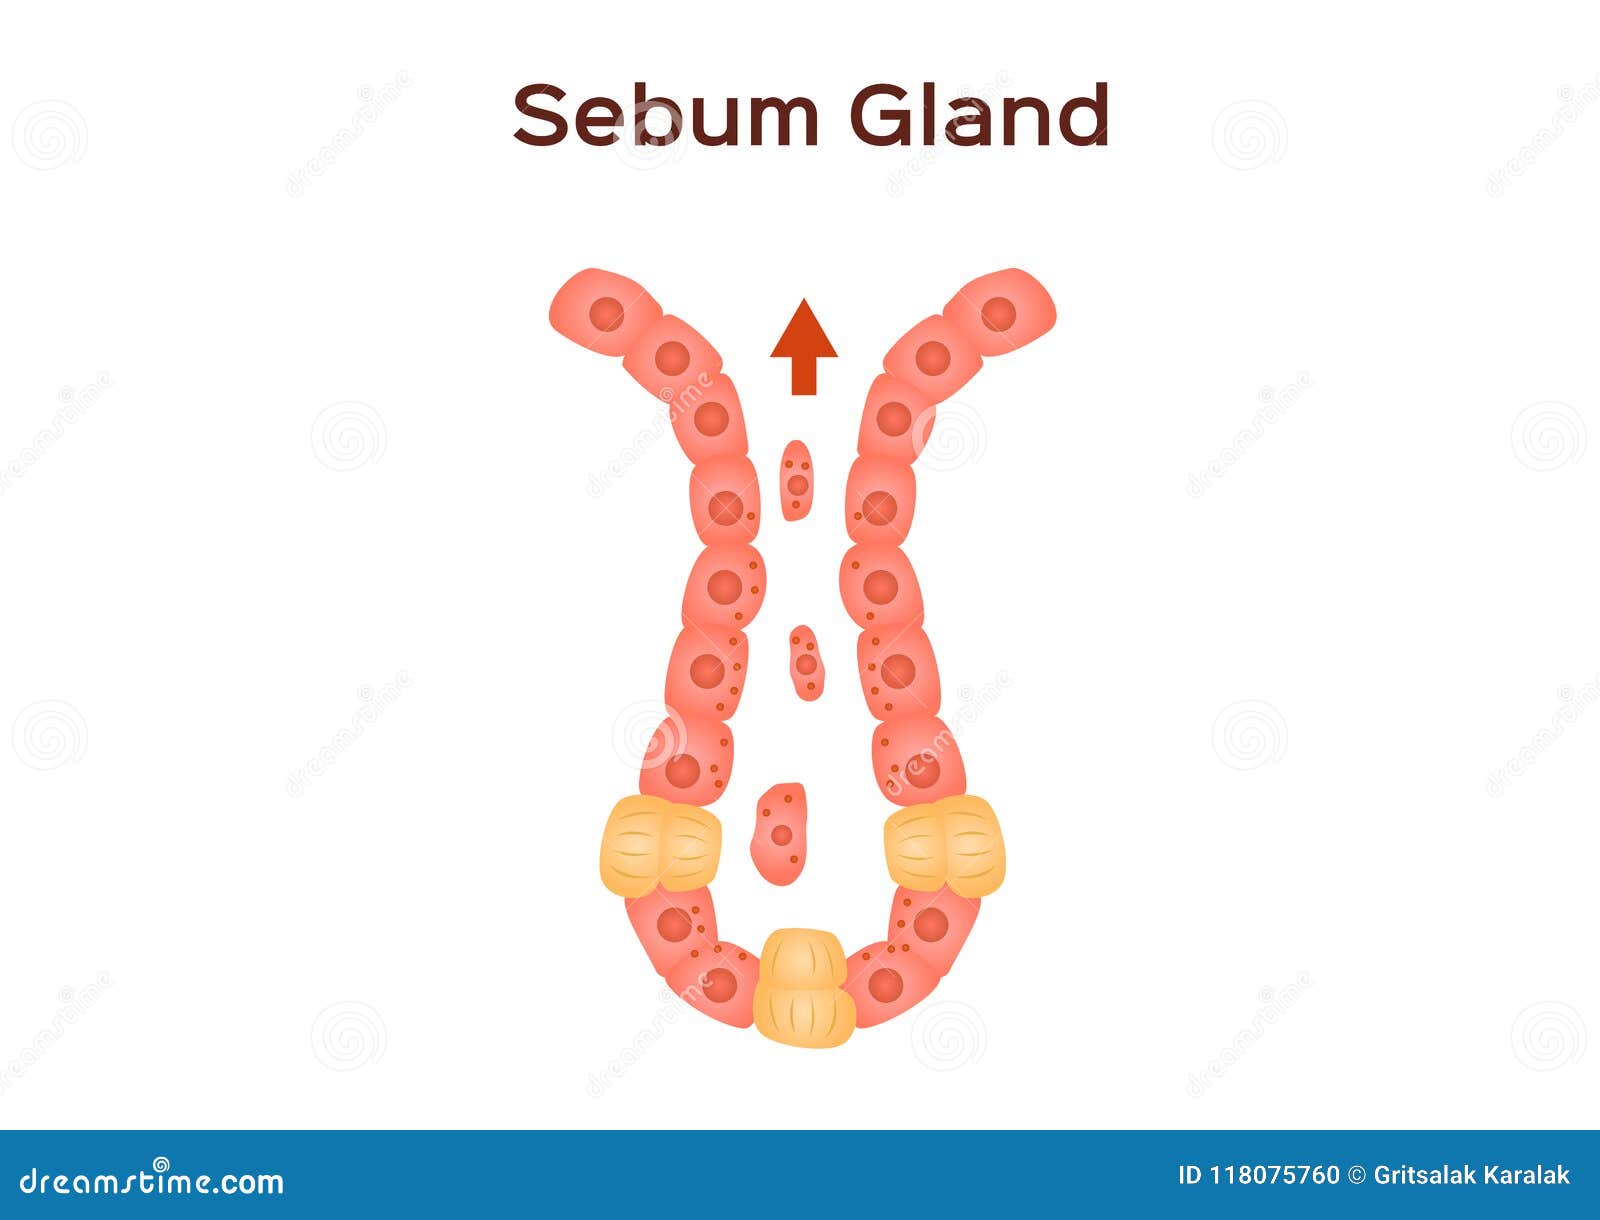 sebum oil gland in human skin